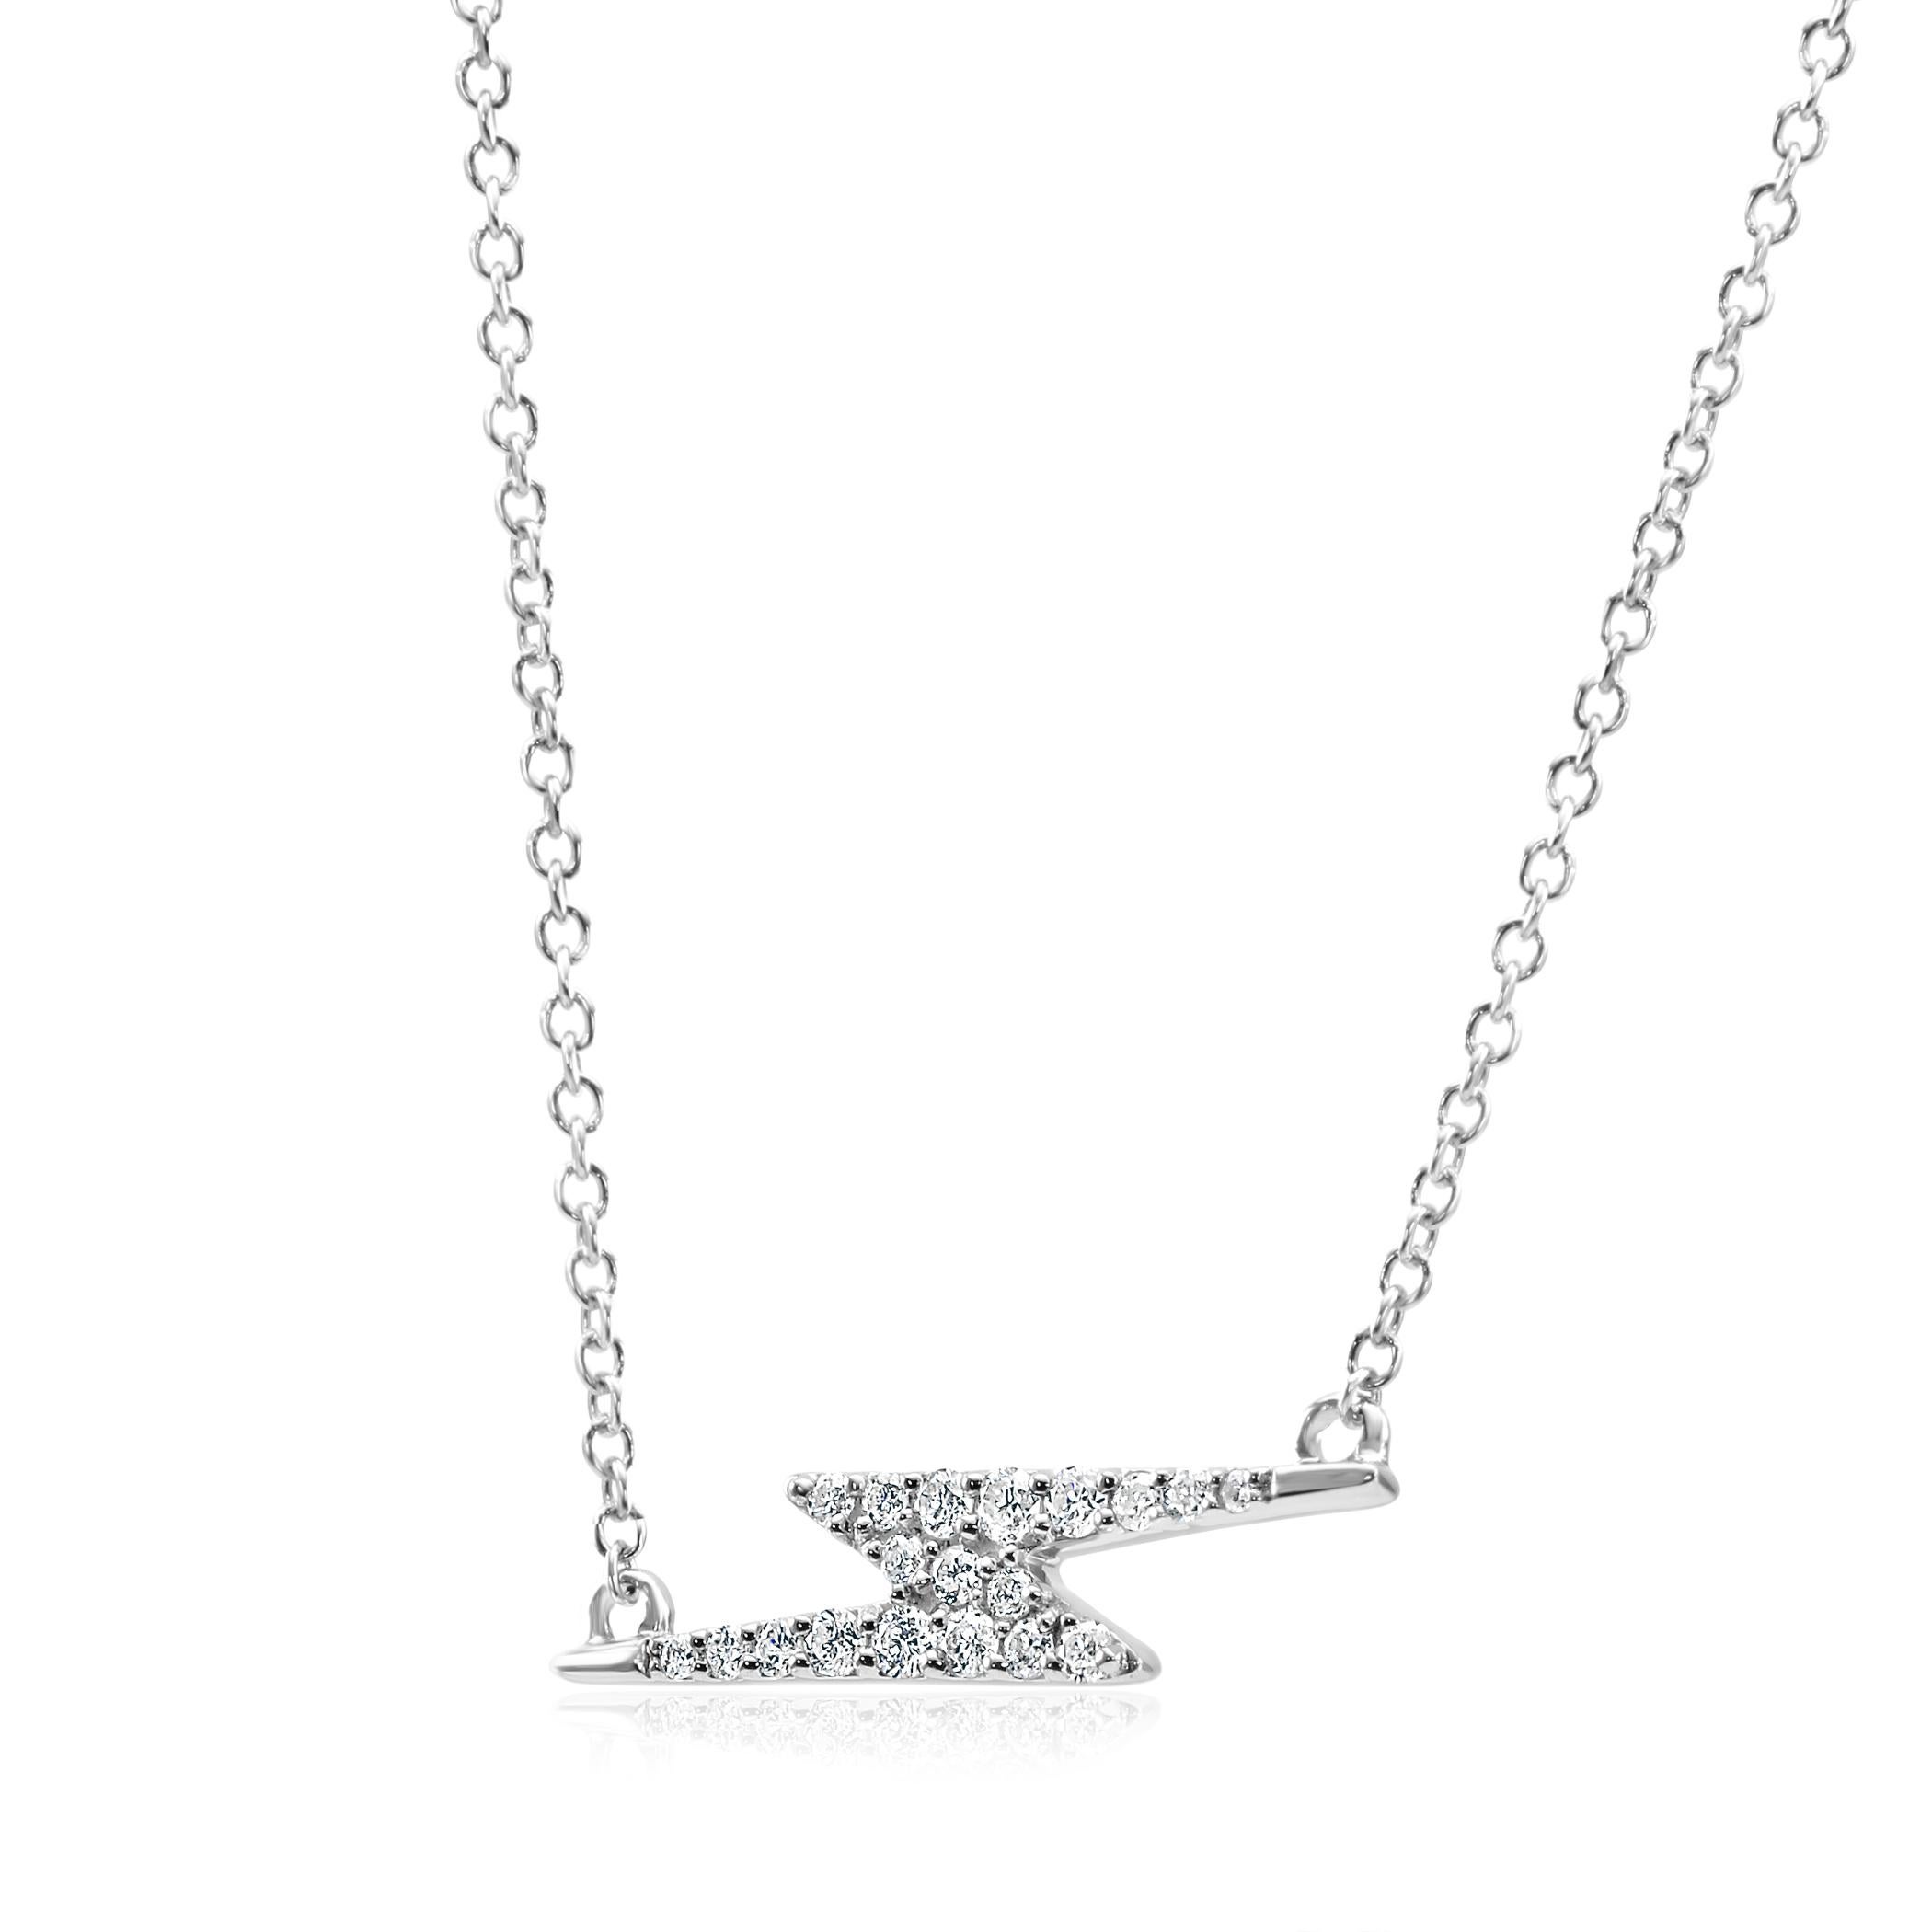 Round Cut Round White Diamonds Fashion Drop Pendant 14 Karat White Gold Chain Necklace